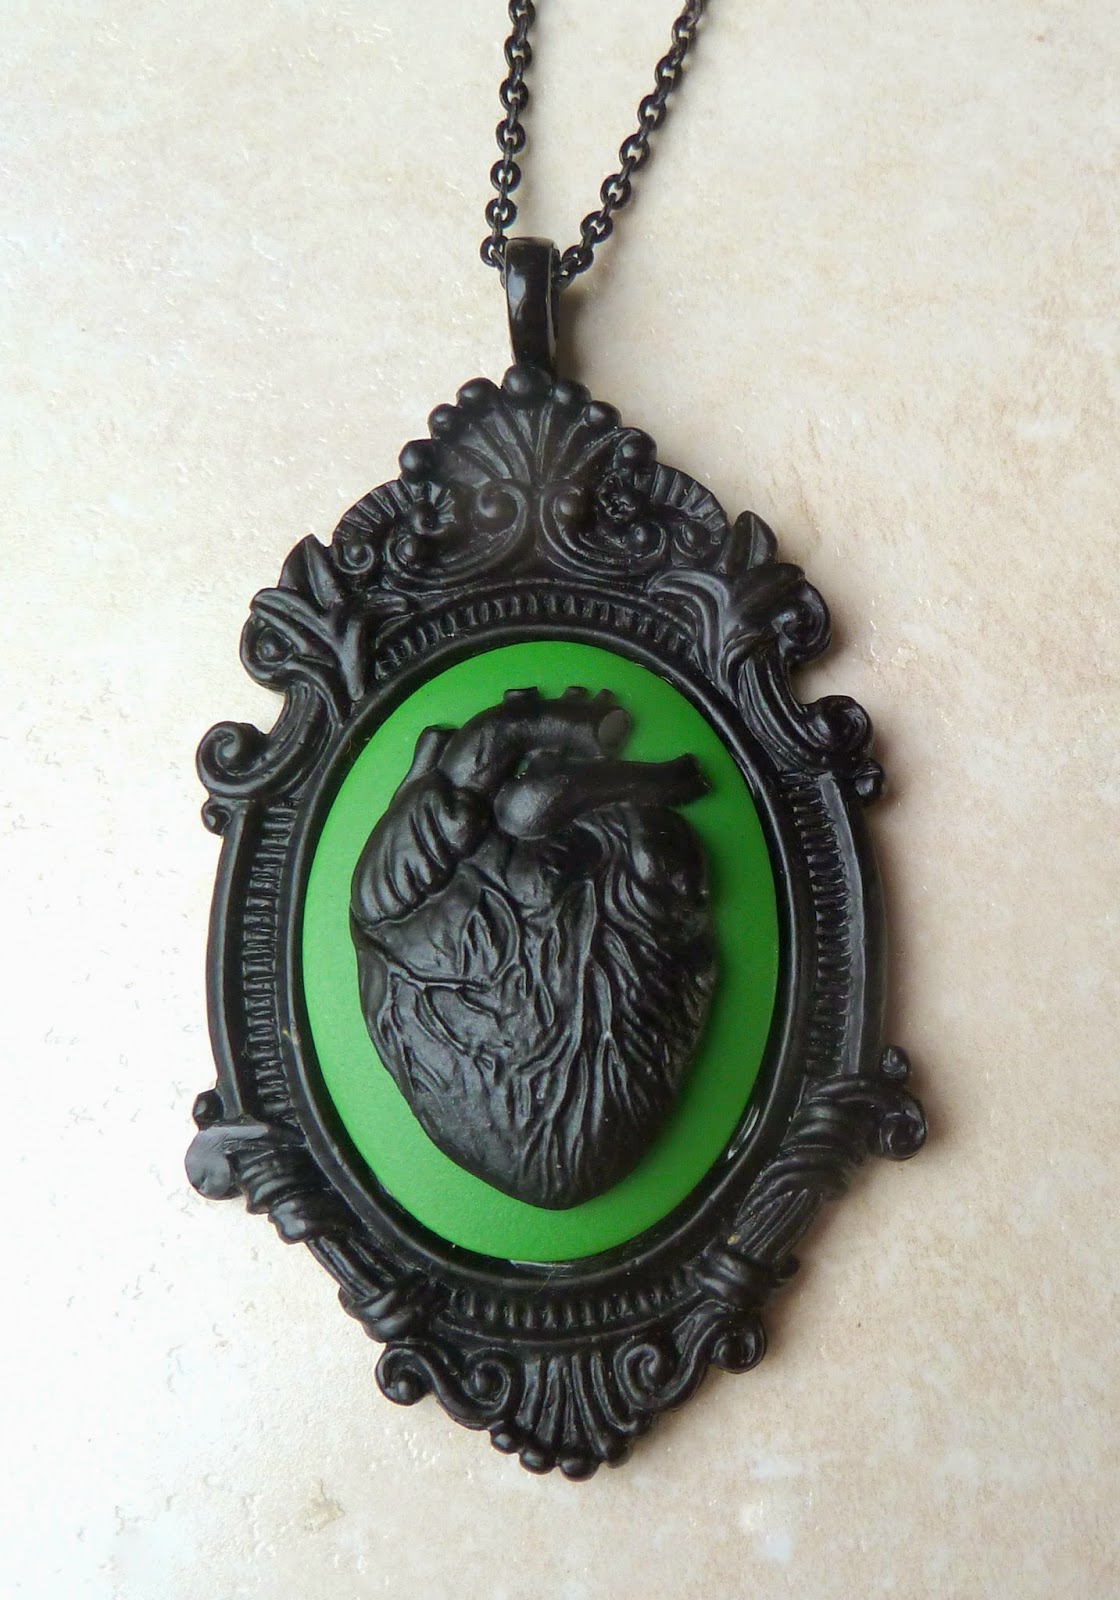 http://www.kcavintagegems.uk/large-black-heart-cameo-pendant-and-necklace-399-p.asp